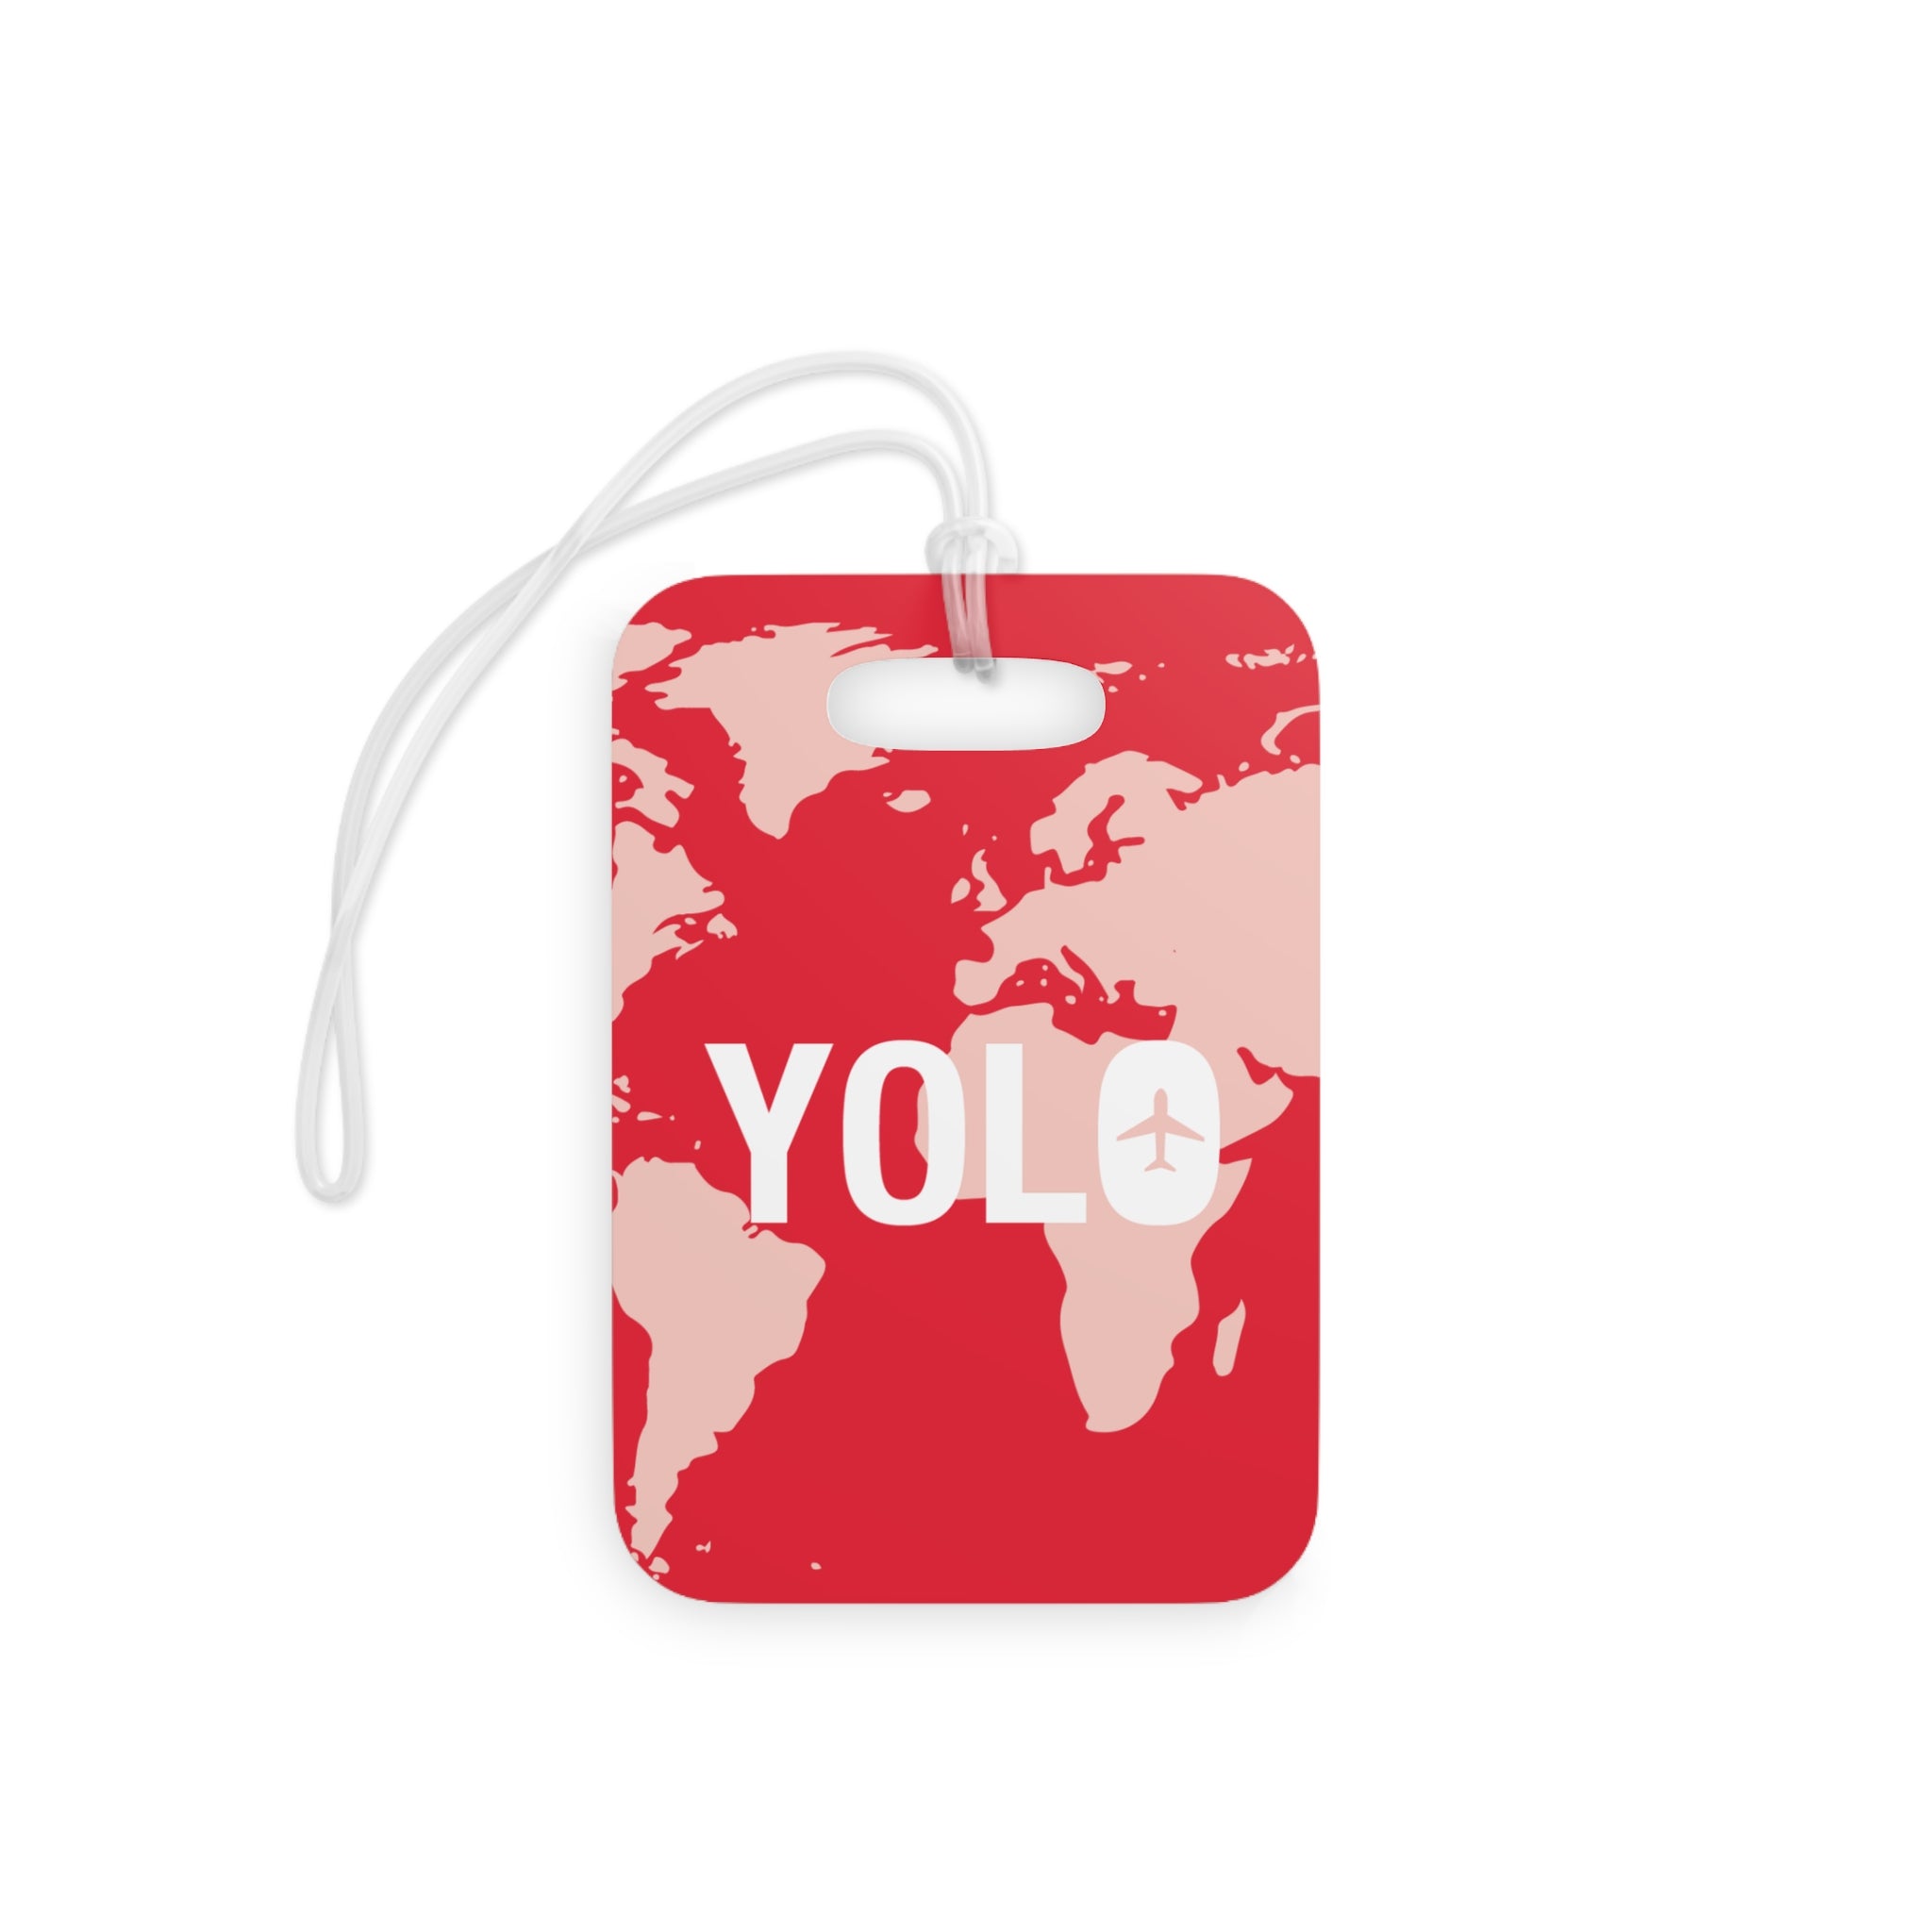 Yolo Luggage Tag (Red)